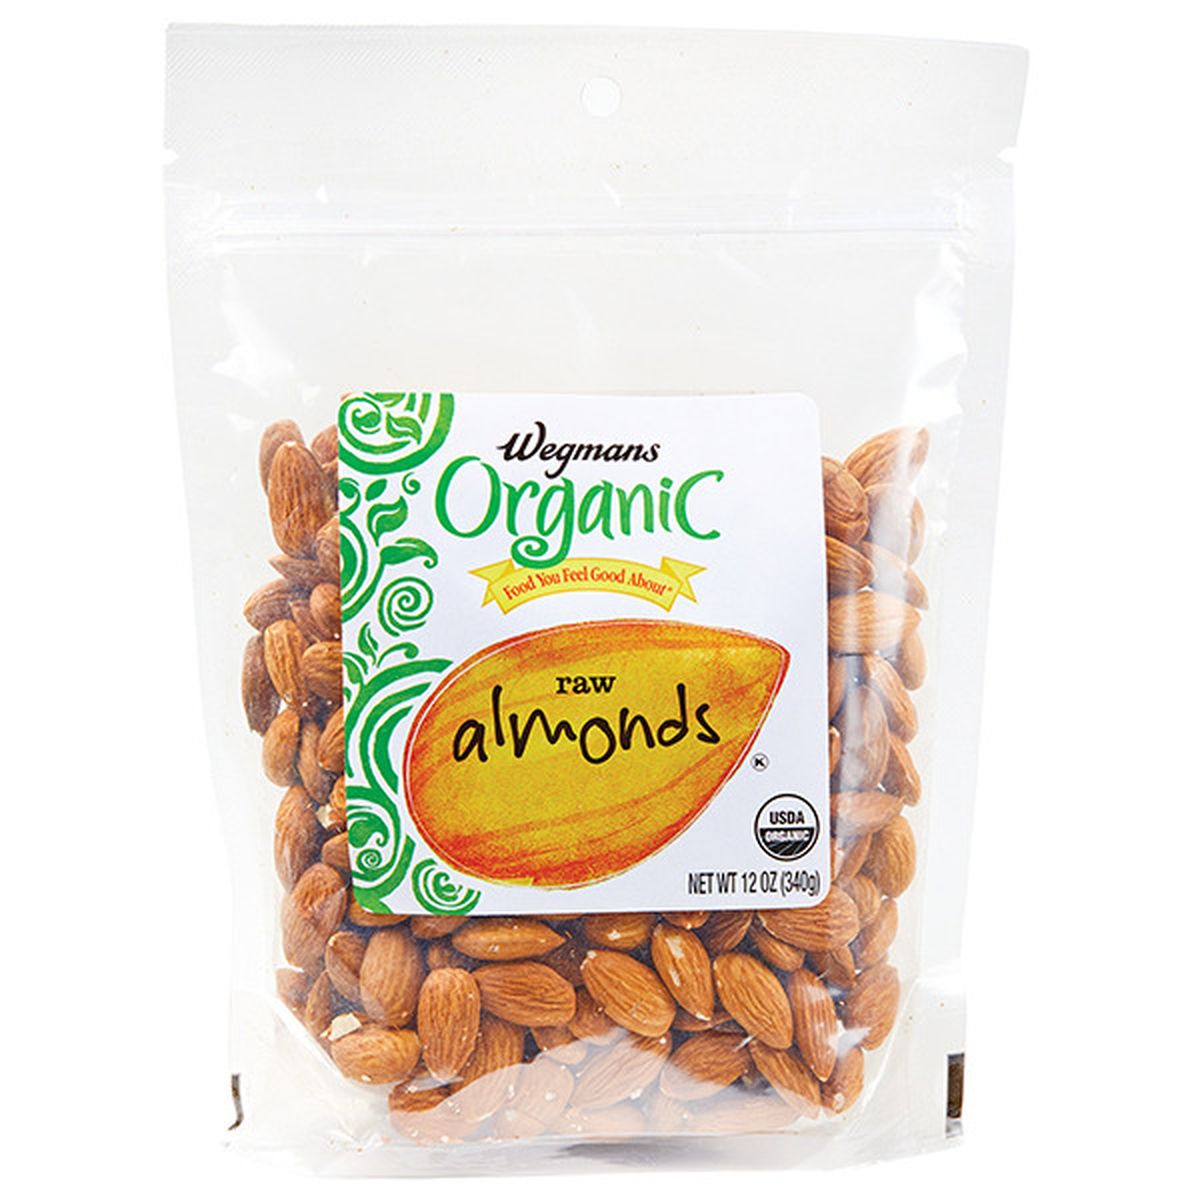 Calories in Wegmans Organic Raw Almonds